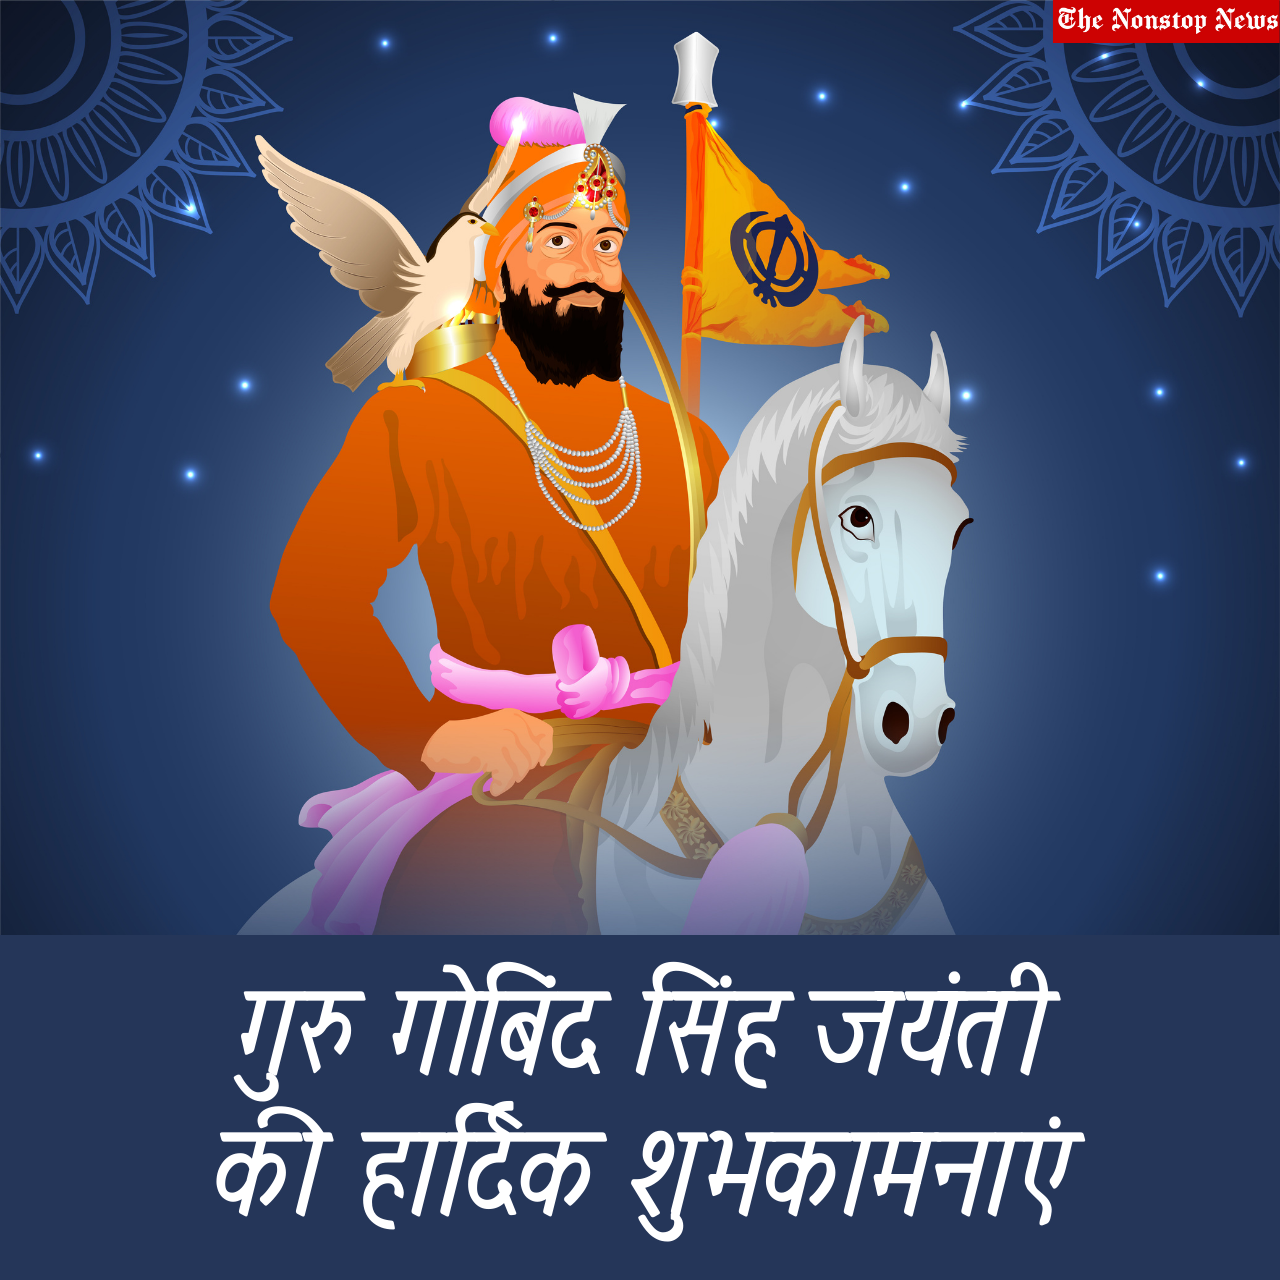 Guru Gobind Singh Jayanti 2022: Hindi Wishes, Quotes, Greetings, HD Images, Messages, Shayari, and Status to share